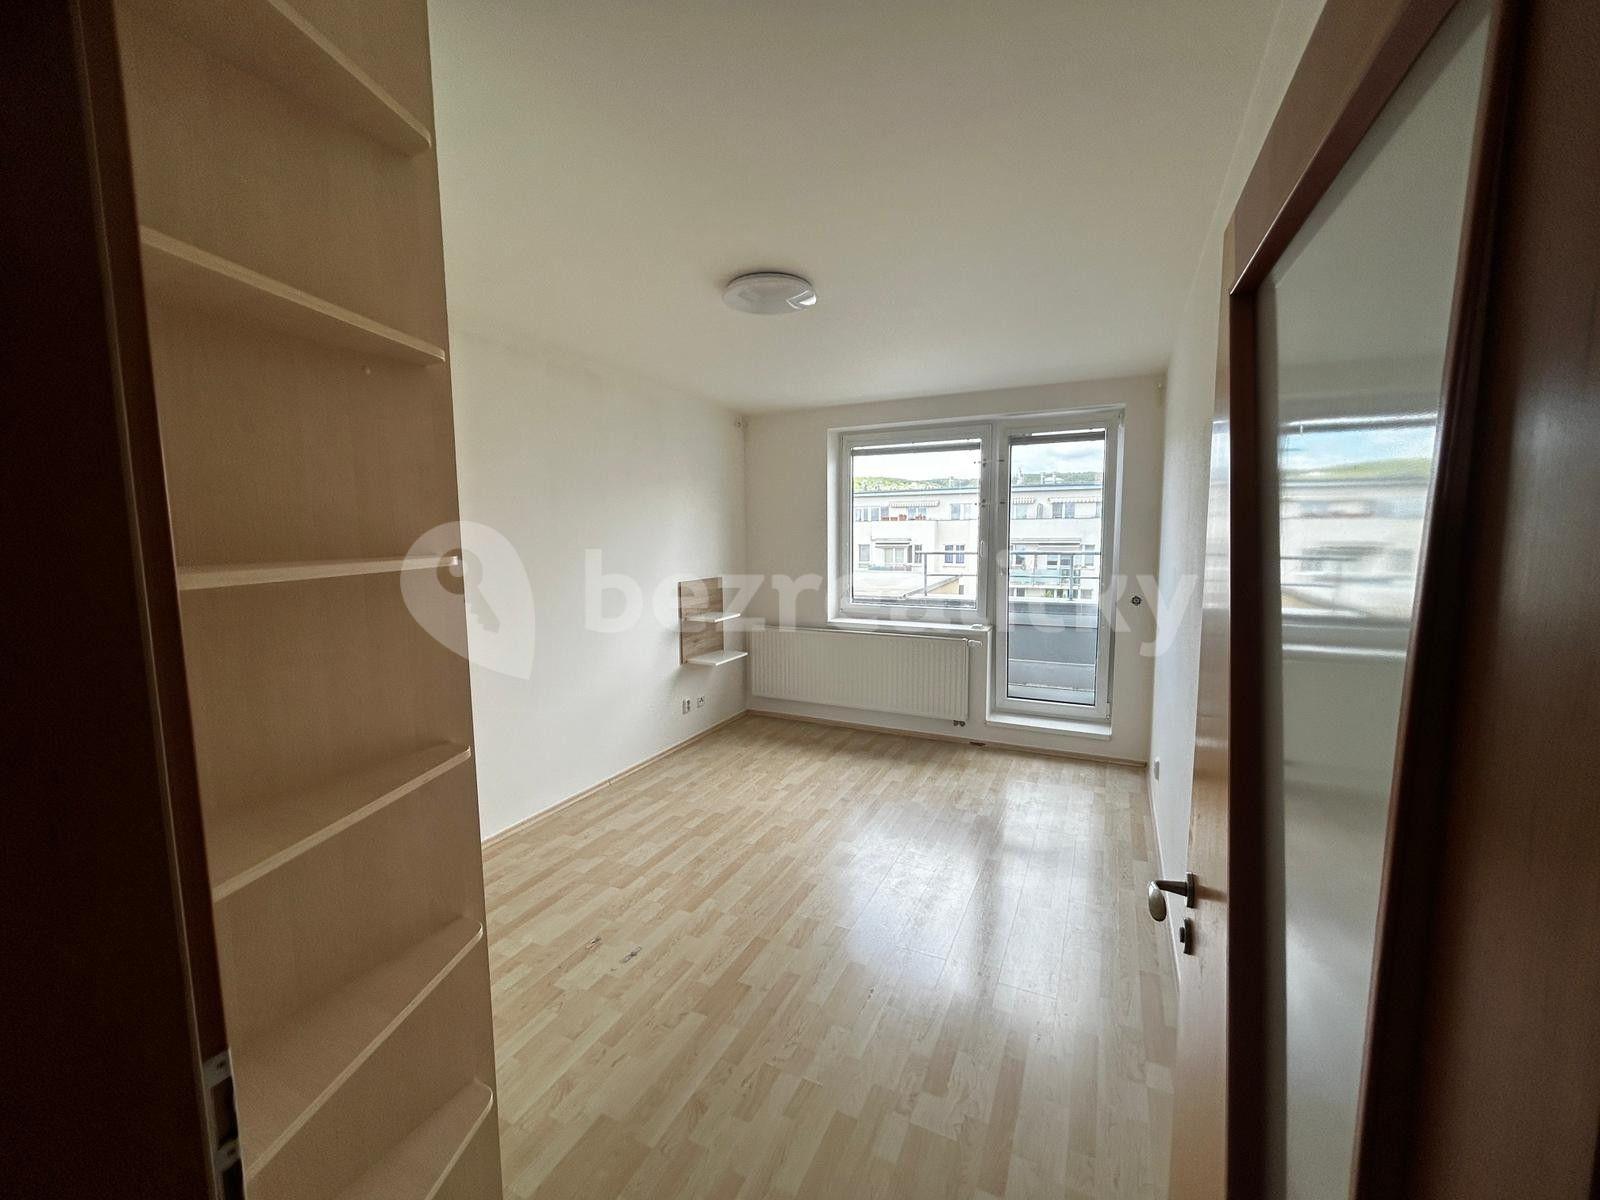 2 bedroom with open-plan kitchen flat to rent, 107 m², Ke Statku, Brno, Jihomoravský Region